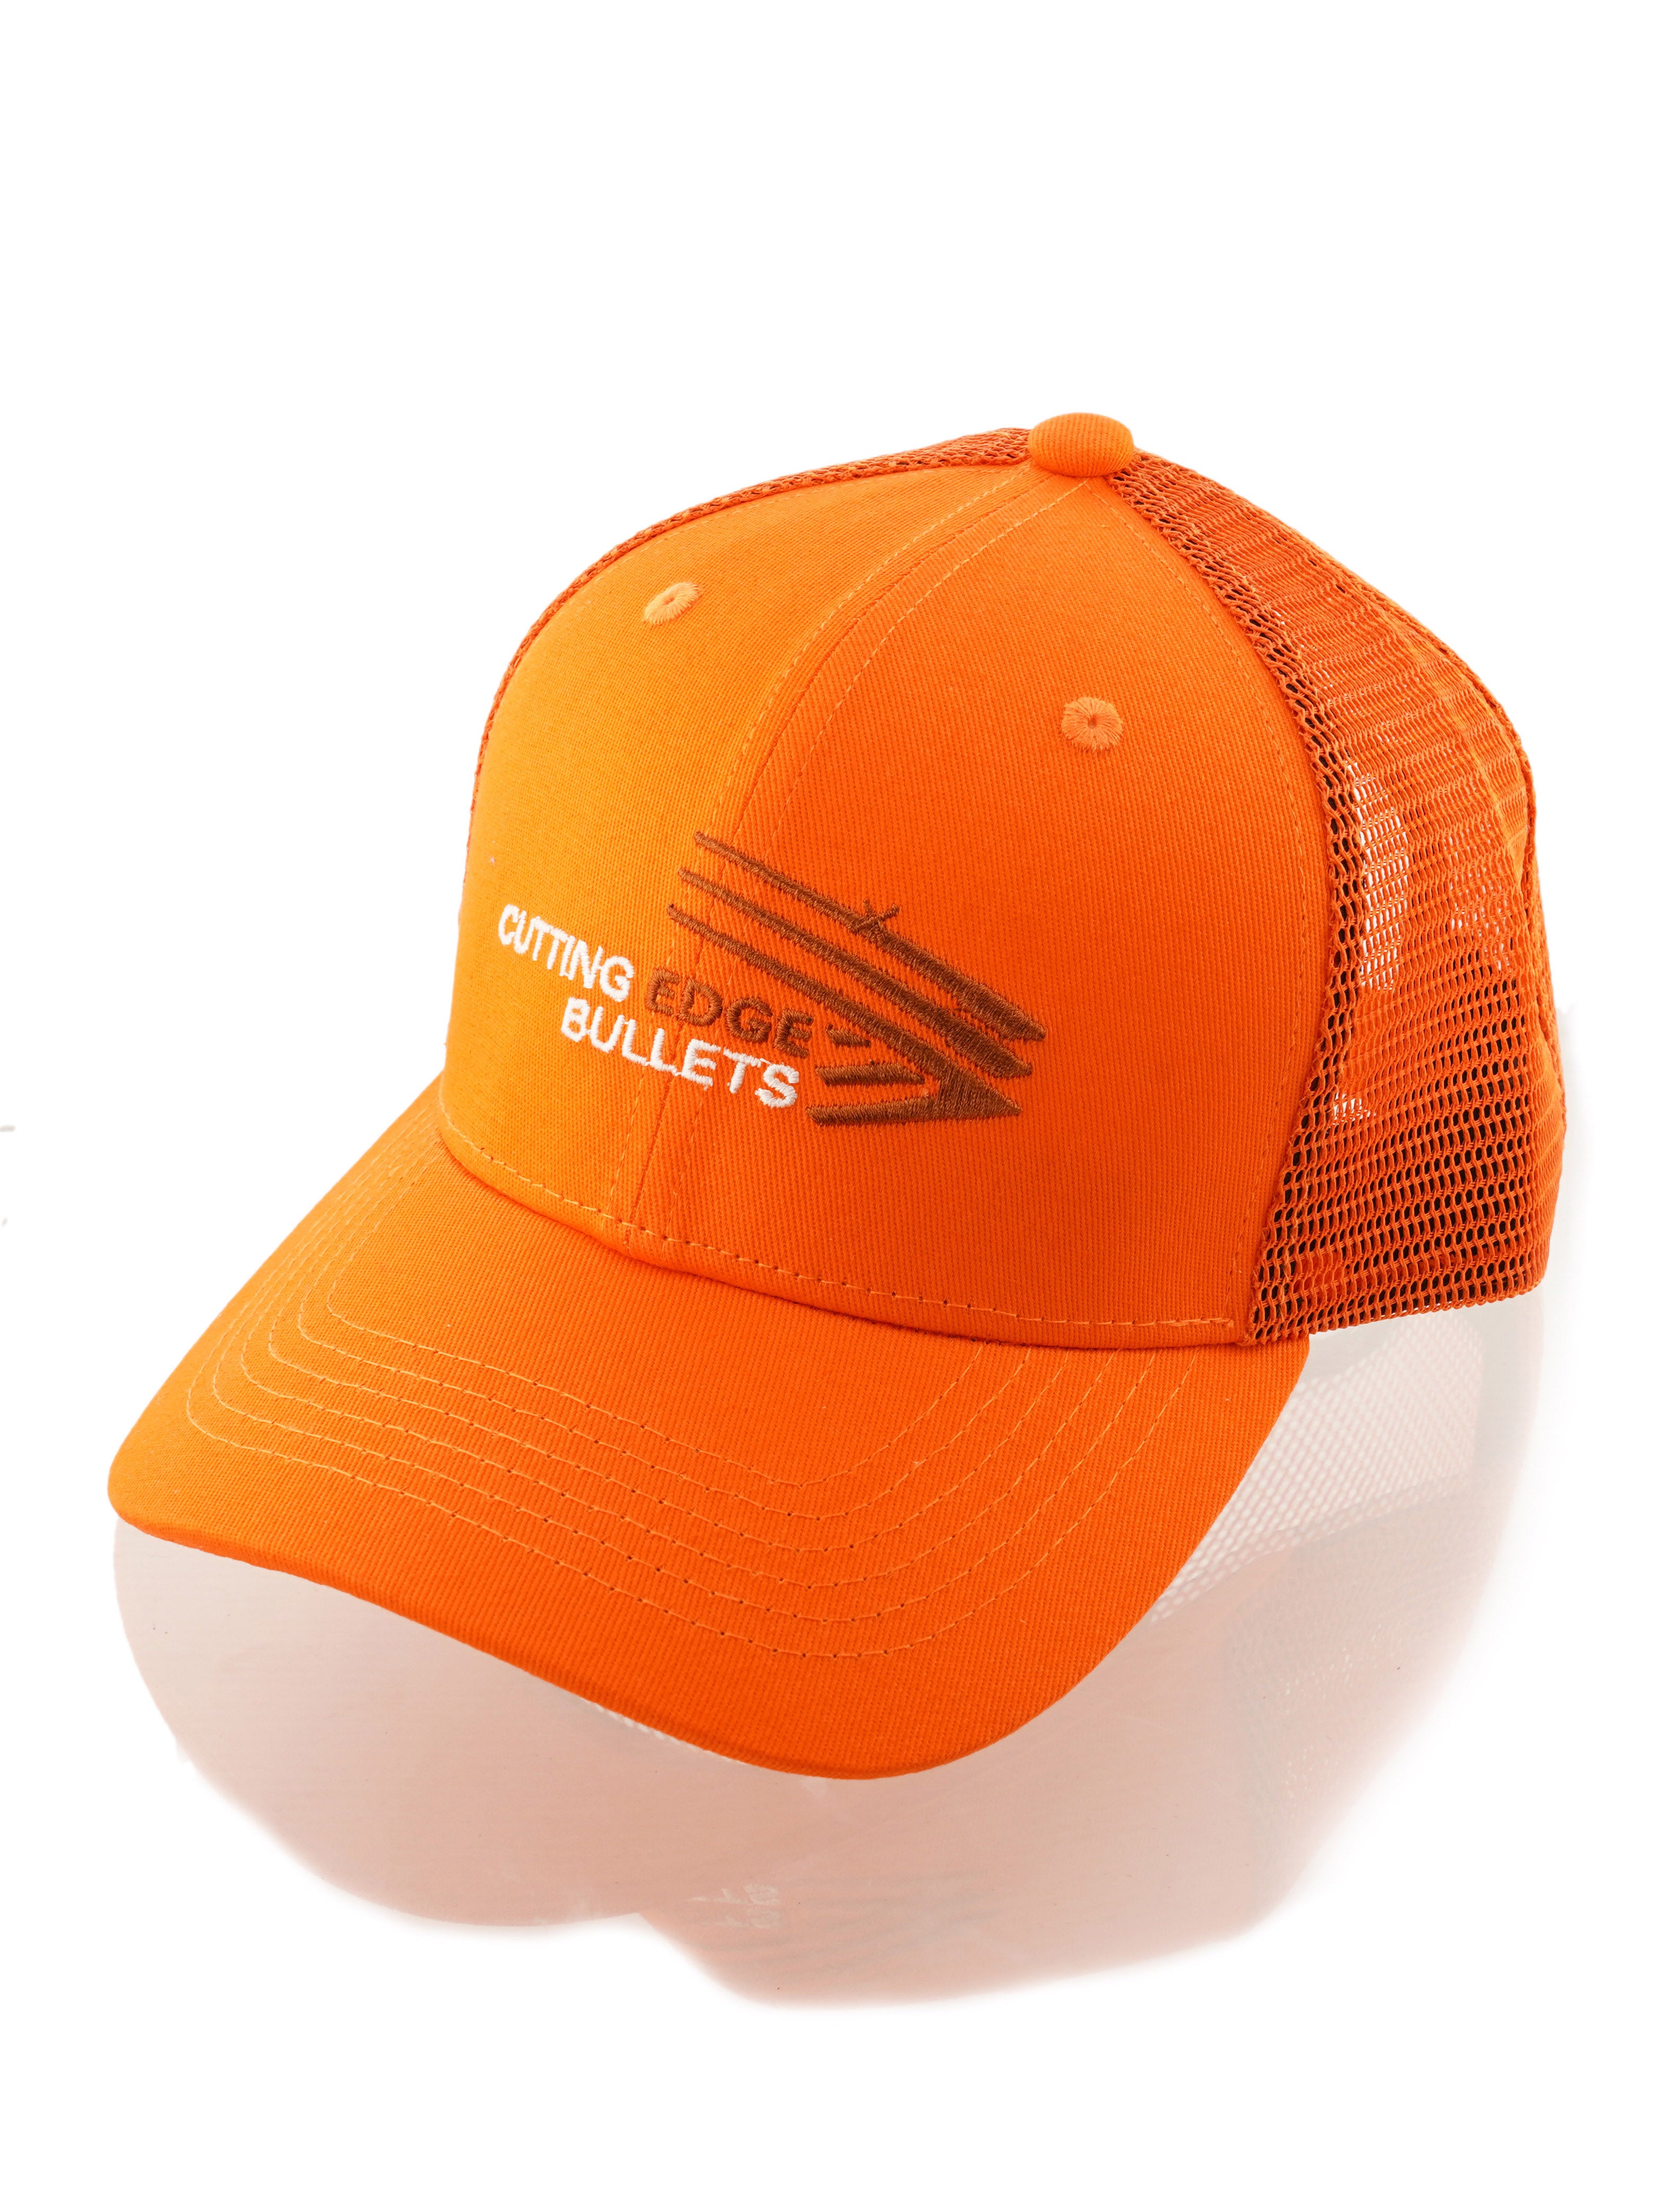 Blaze Orange Snapback Hat